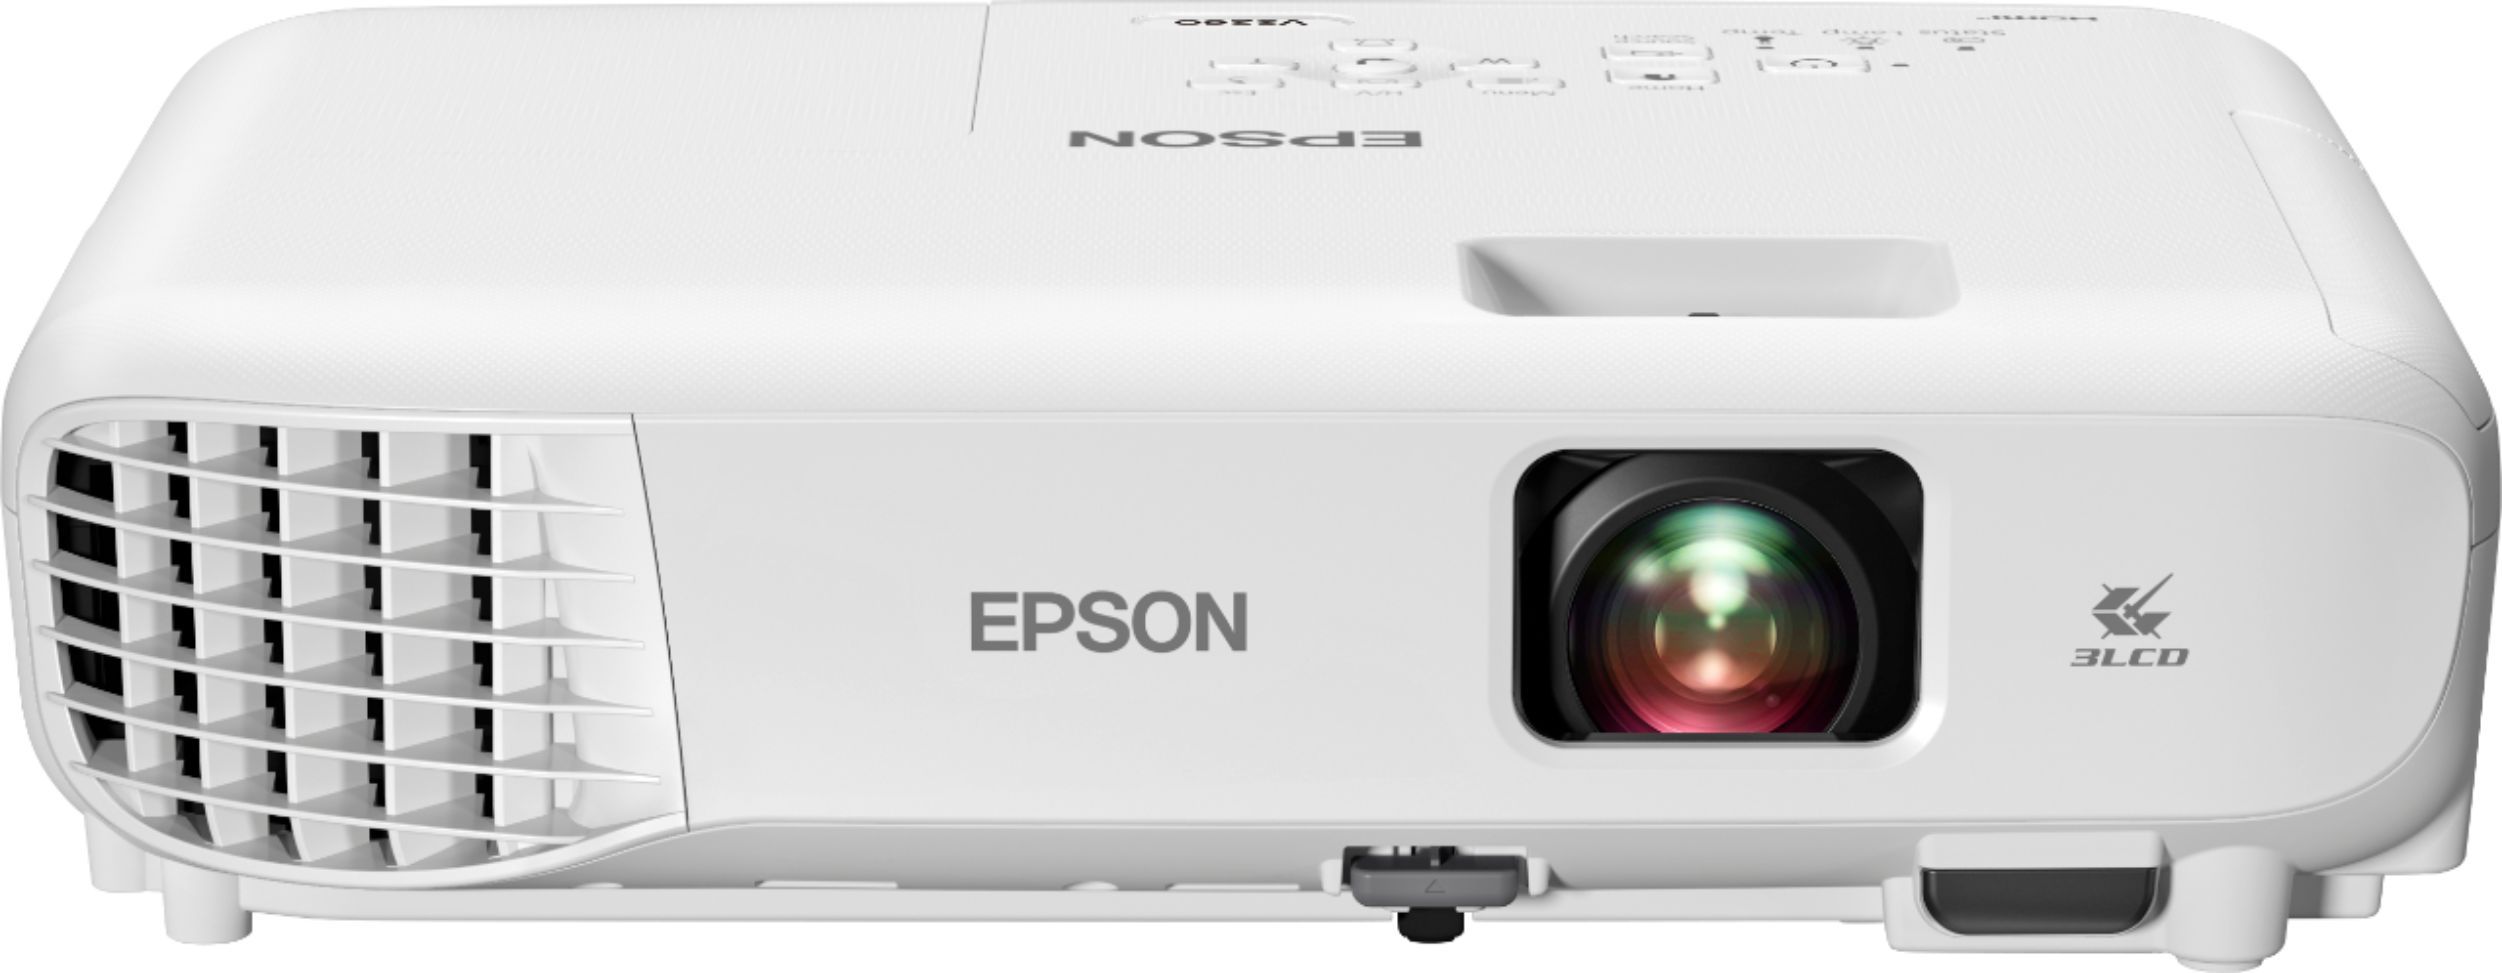 Epson VS260 XGA (1024 x 768) 3LCD Projector White EPSON VS260 PROJECTOR V11H971220 - Best Buy | Best Buy U.S.